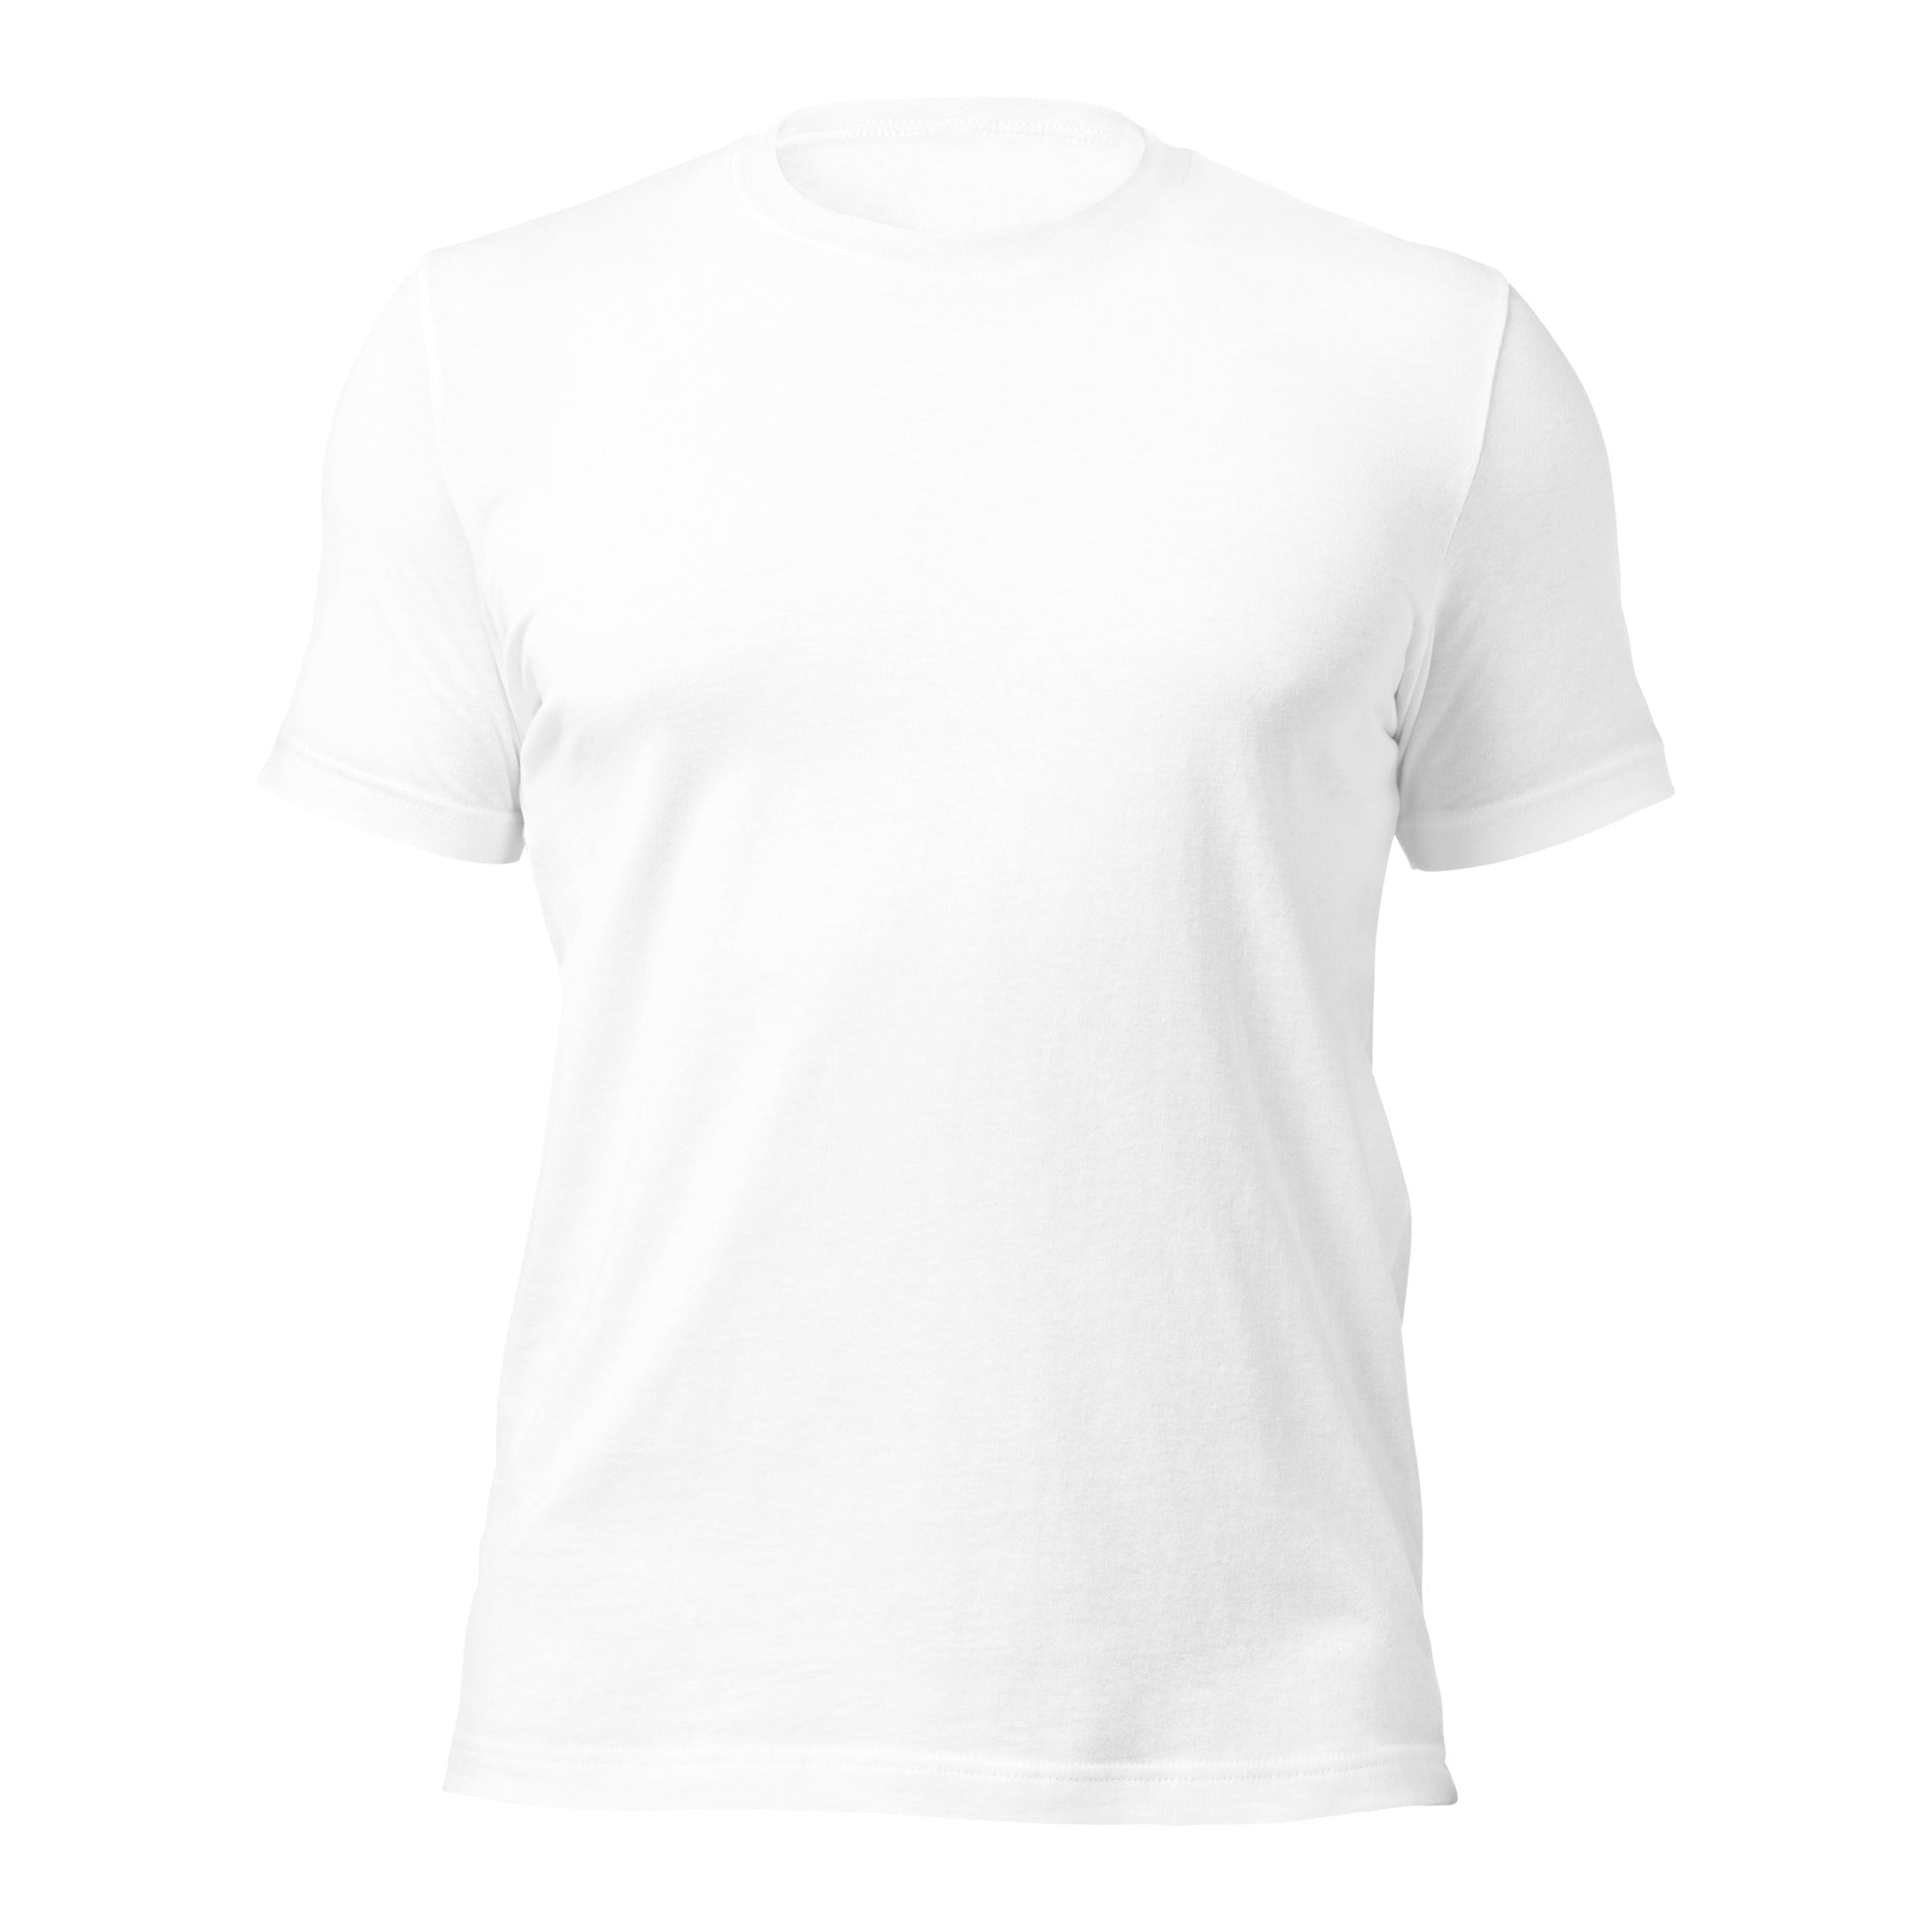 Gordon Setter - Short Sleeve Cotton Tee Shirt